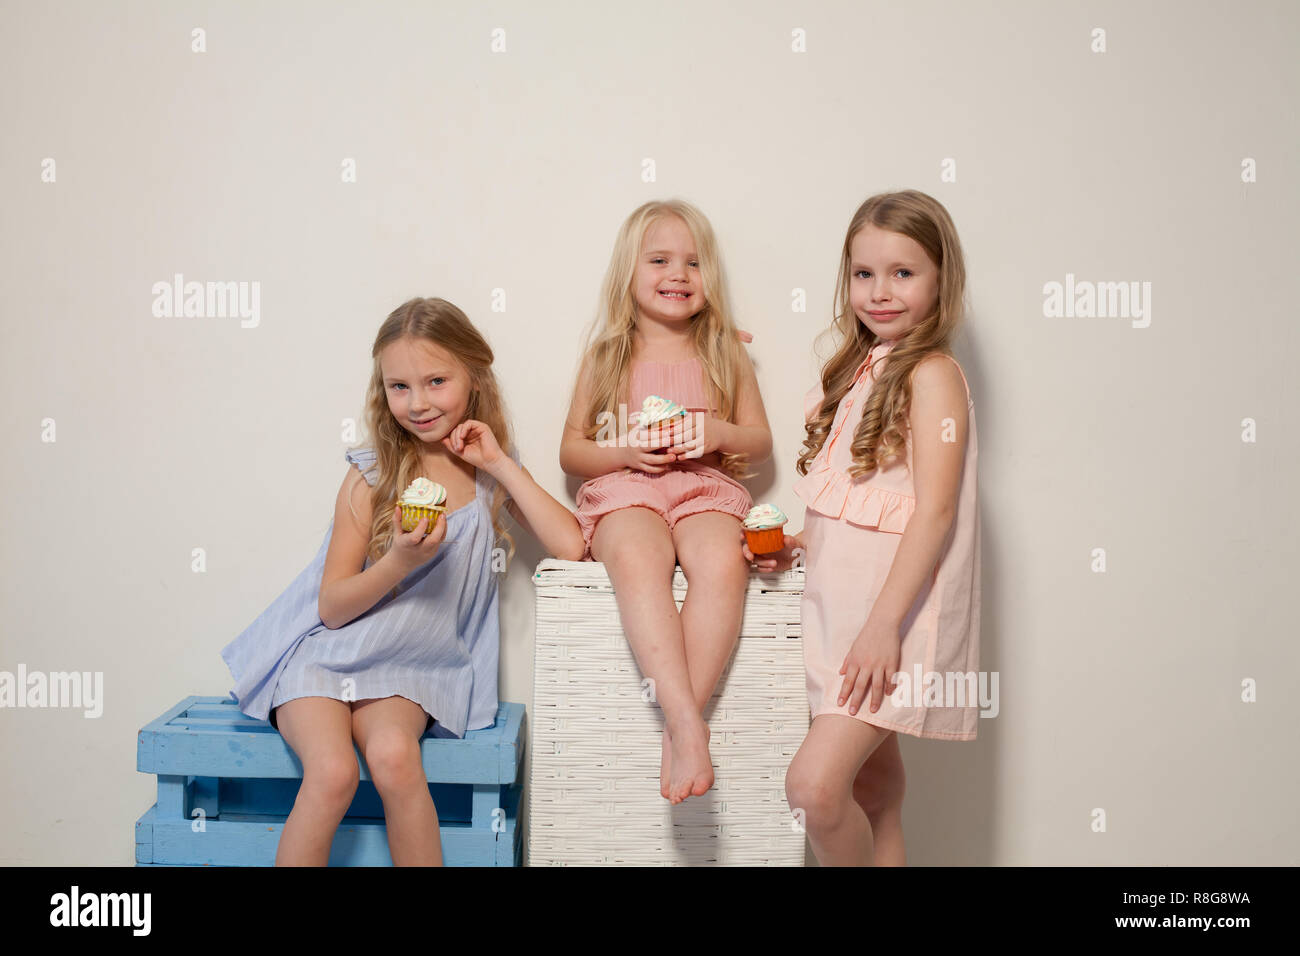 three girls girlfriend eat candy lollipop sister Stock Photo